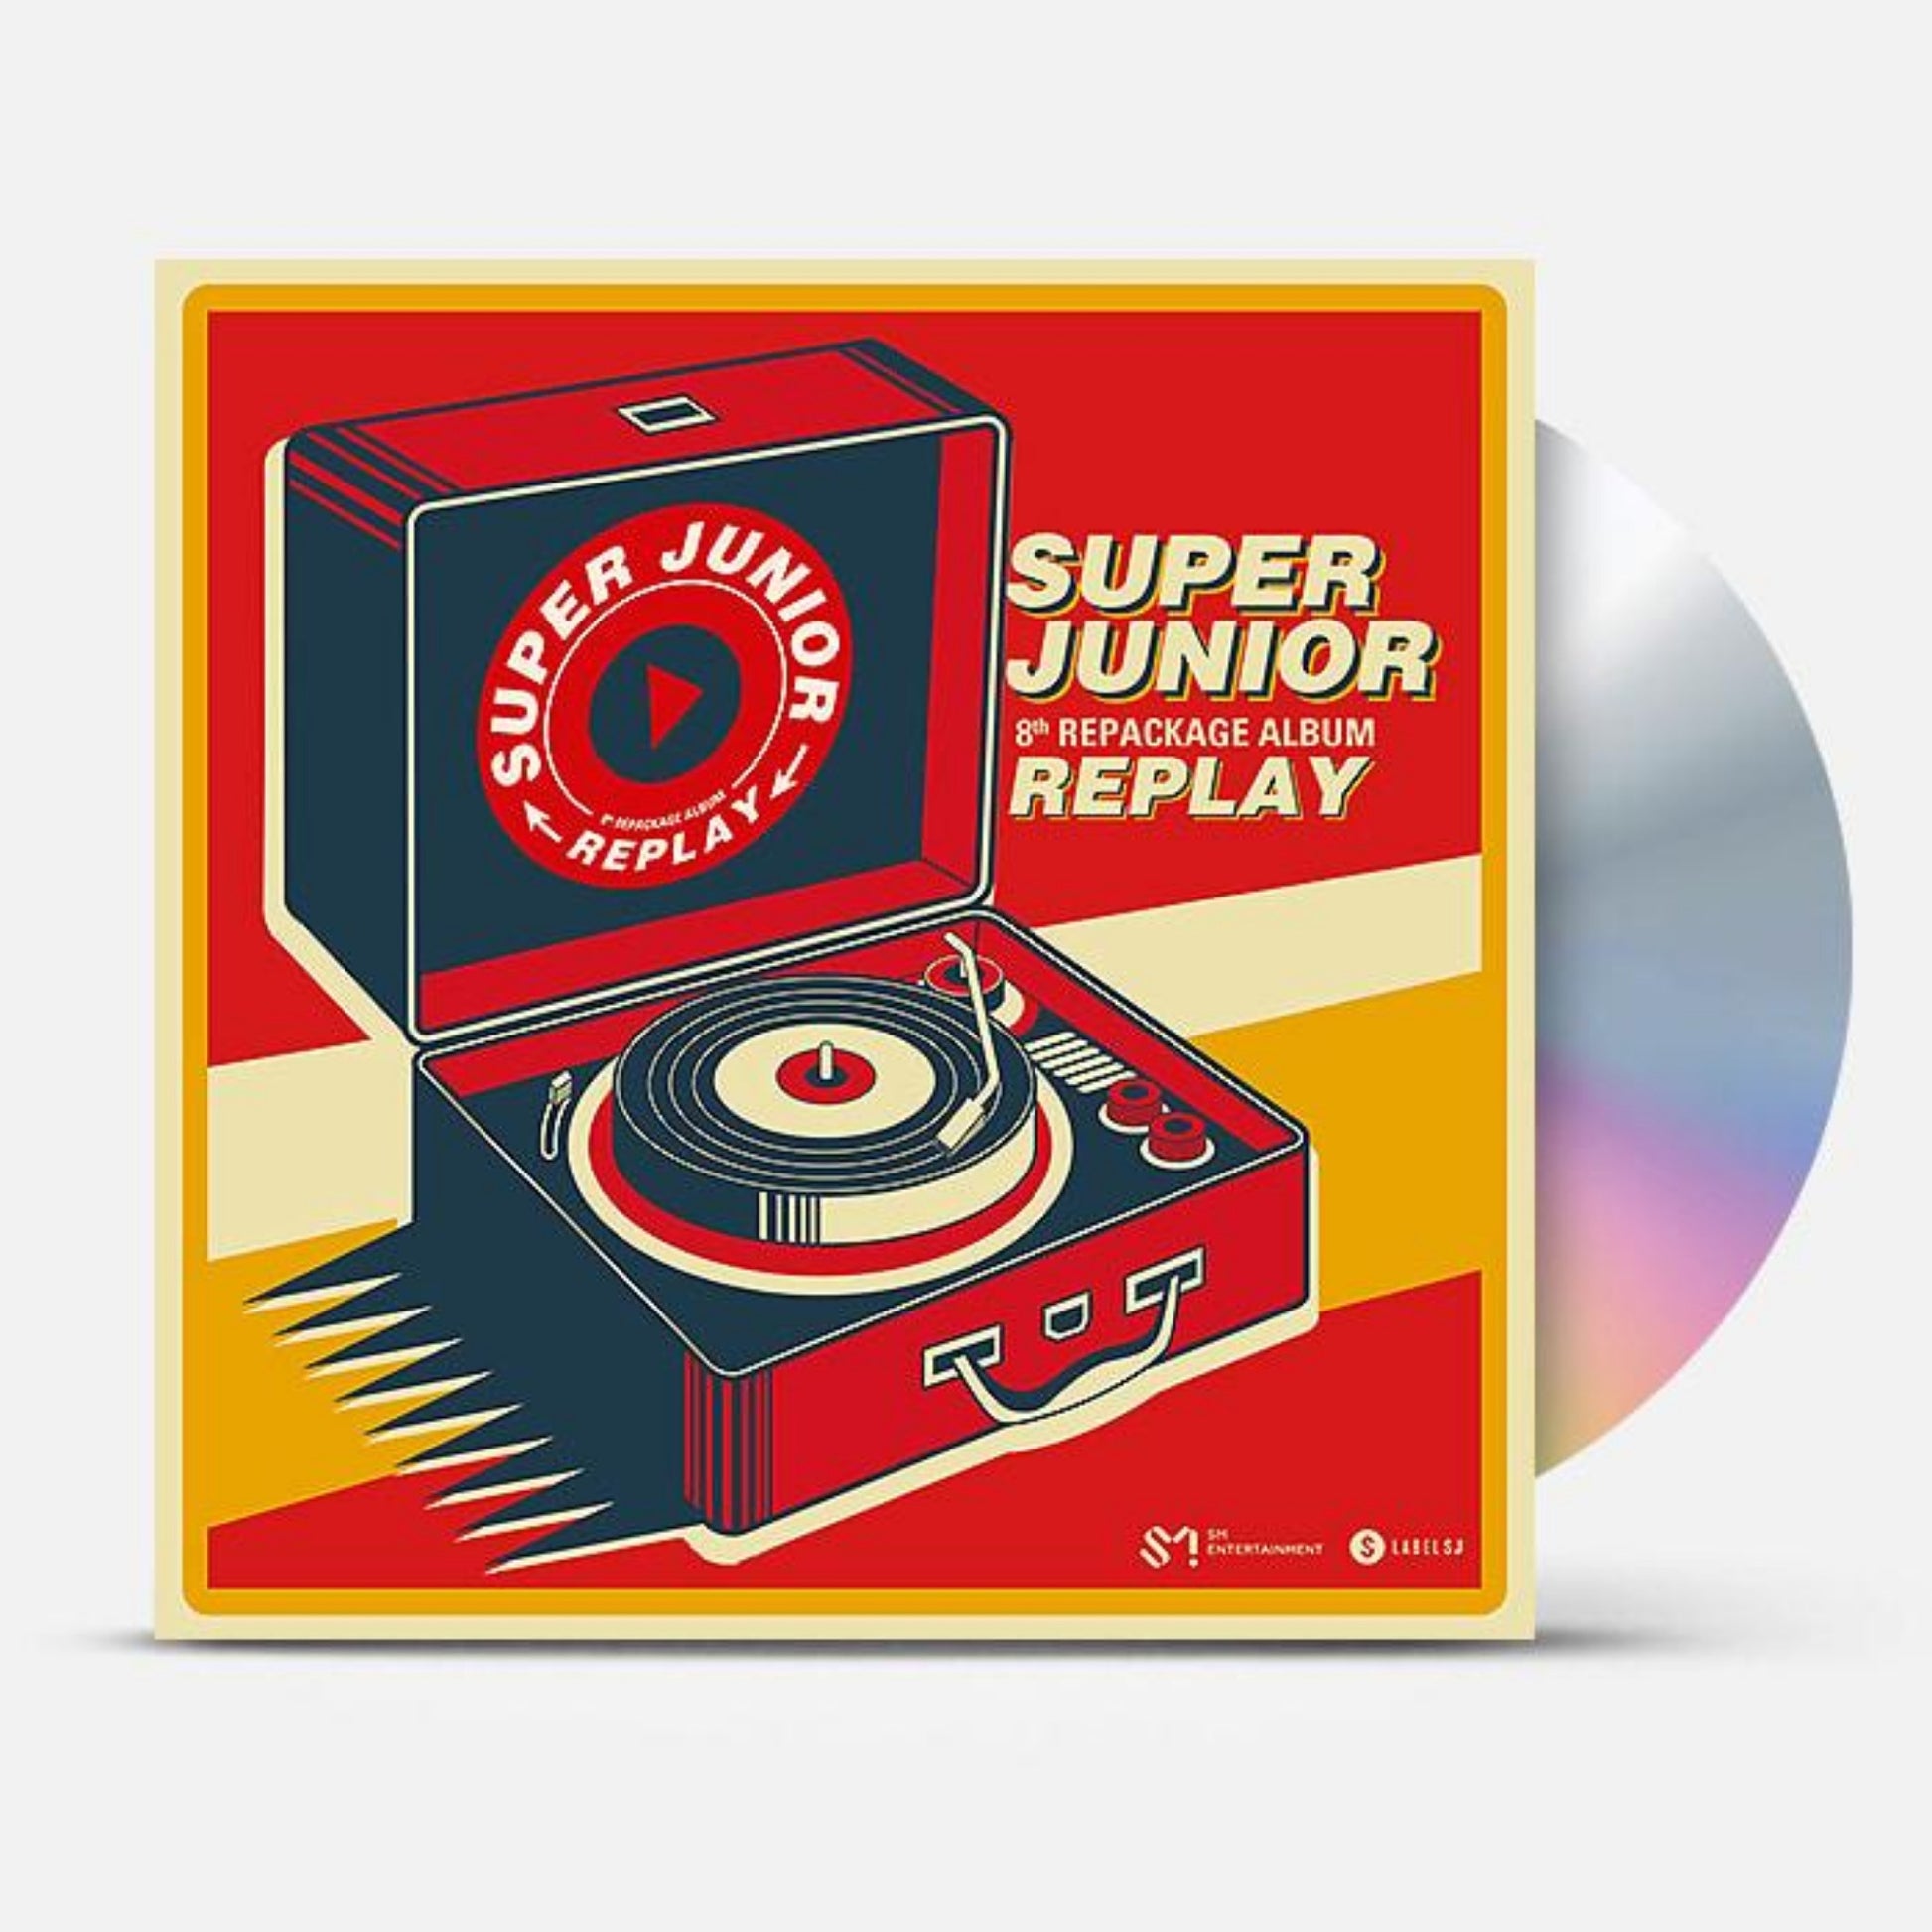 (One) Super Junior - The 8th Album Repackage (REPLAY) || البوم فرقة (سوبر جونيور) اختر من اصل